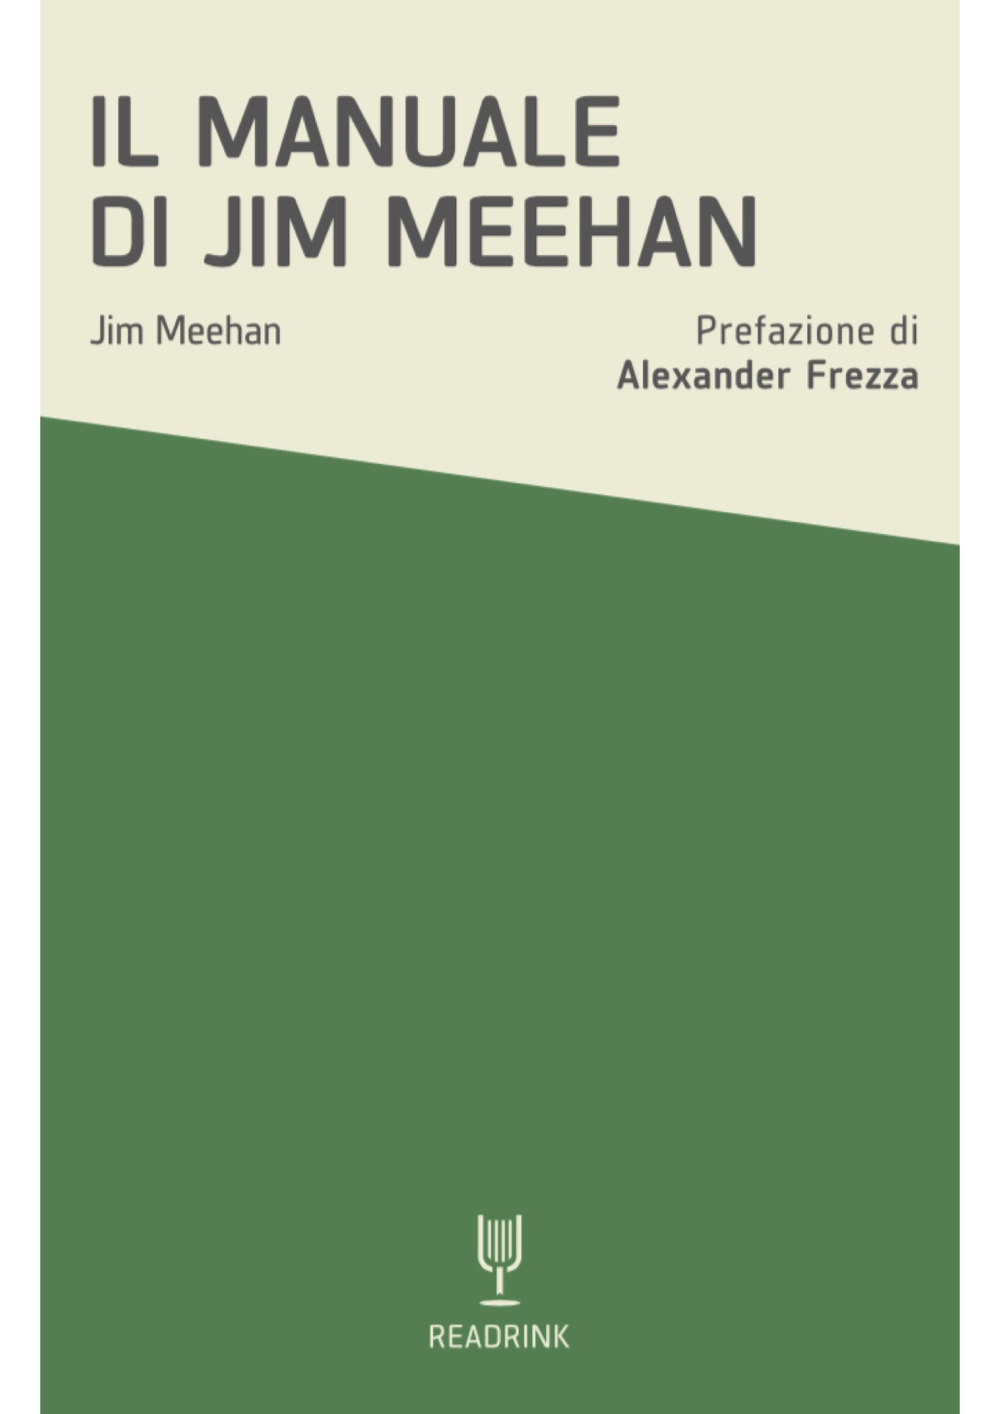 Il manuale di Jim Meehan